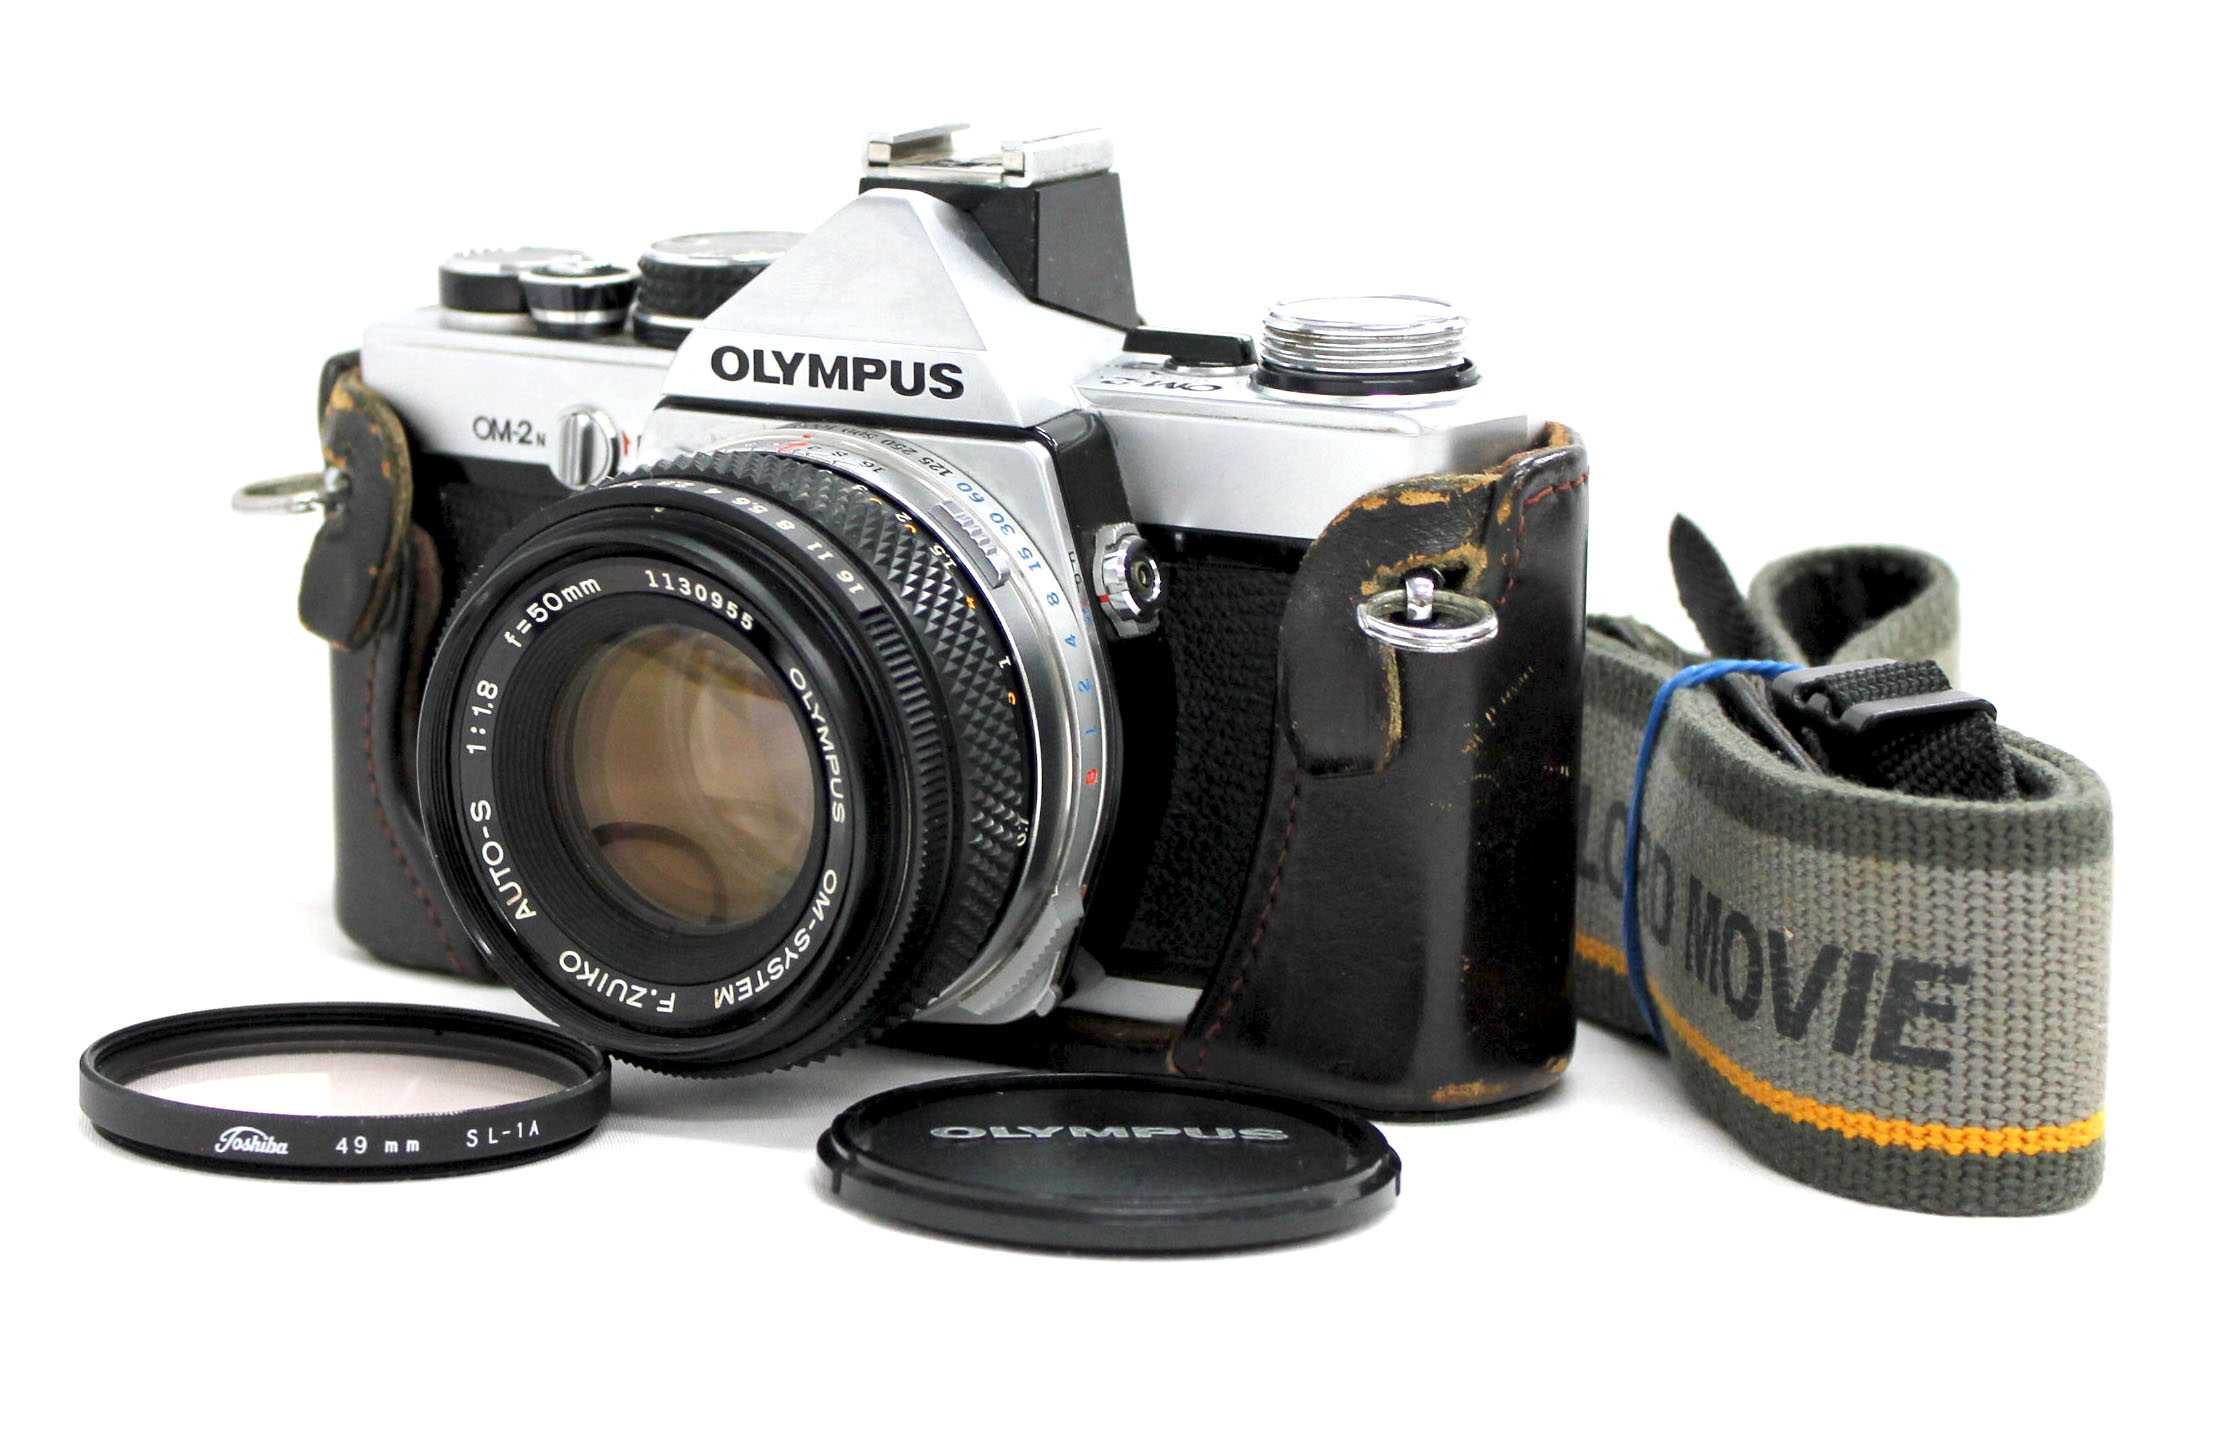 Olympus OM-2N 35mm SLR Film Camera with OM-System F.Zuiko Auto-S 50mm F/1.8 Lens from Japan